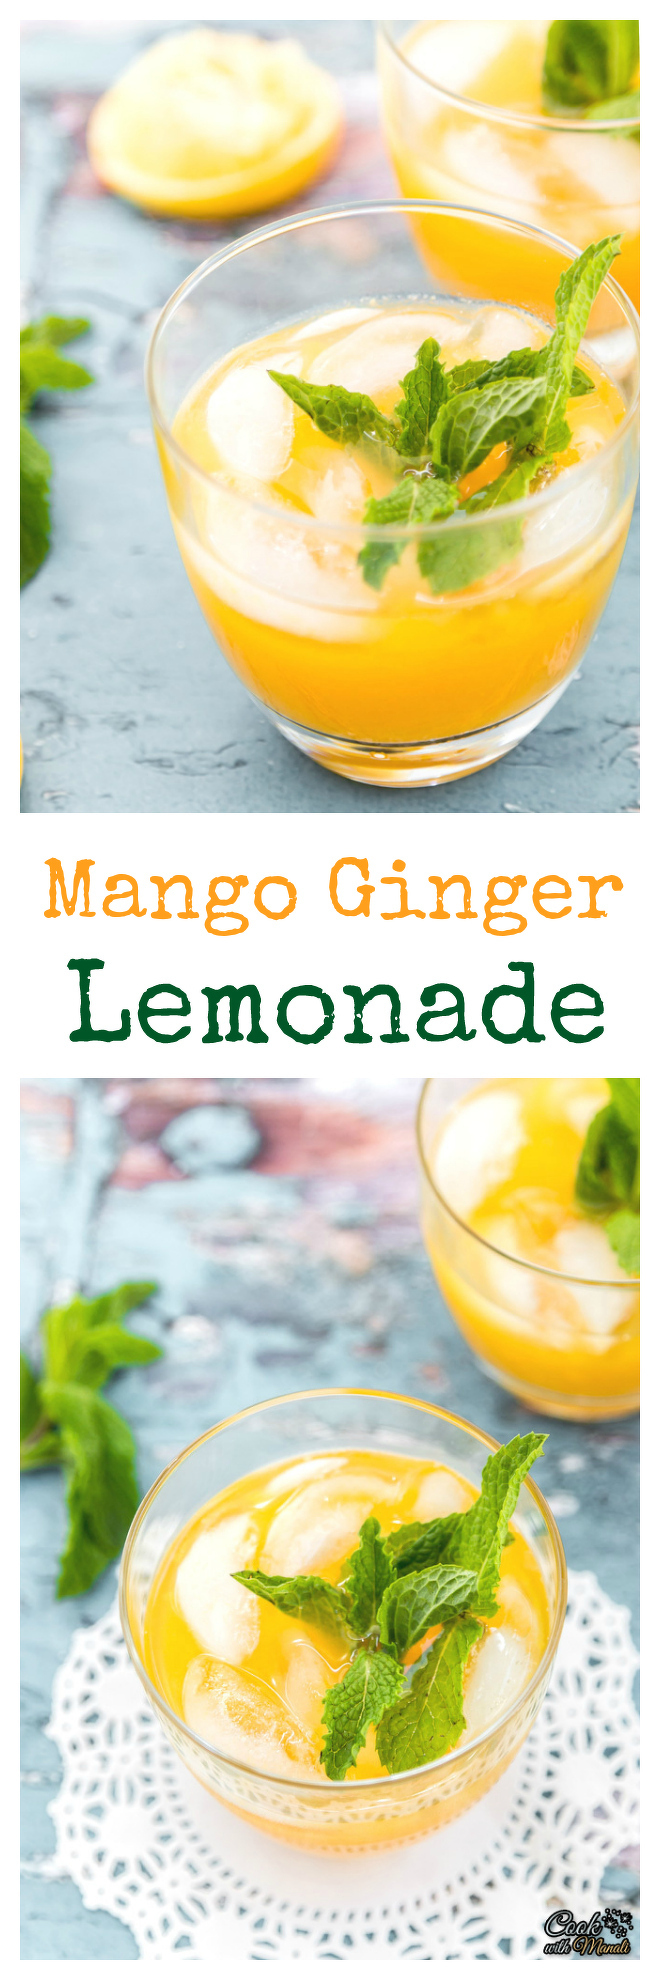 Mango-Ginger-Lemonade-Collage-nocwm